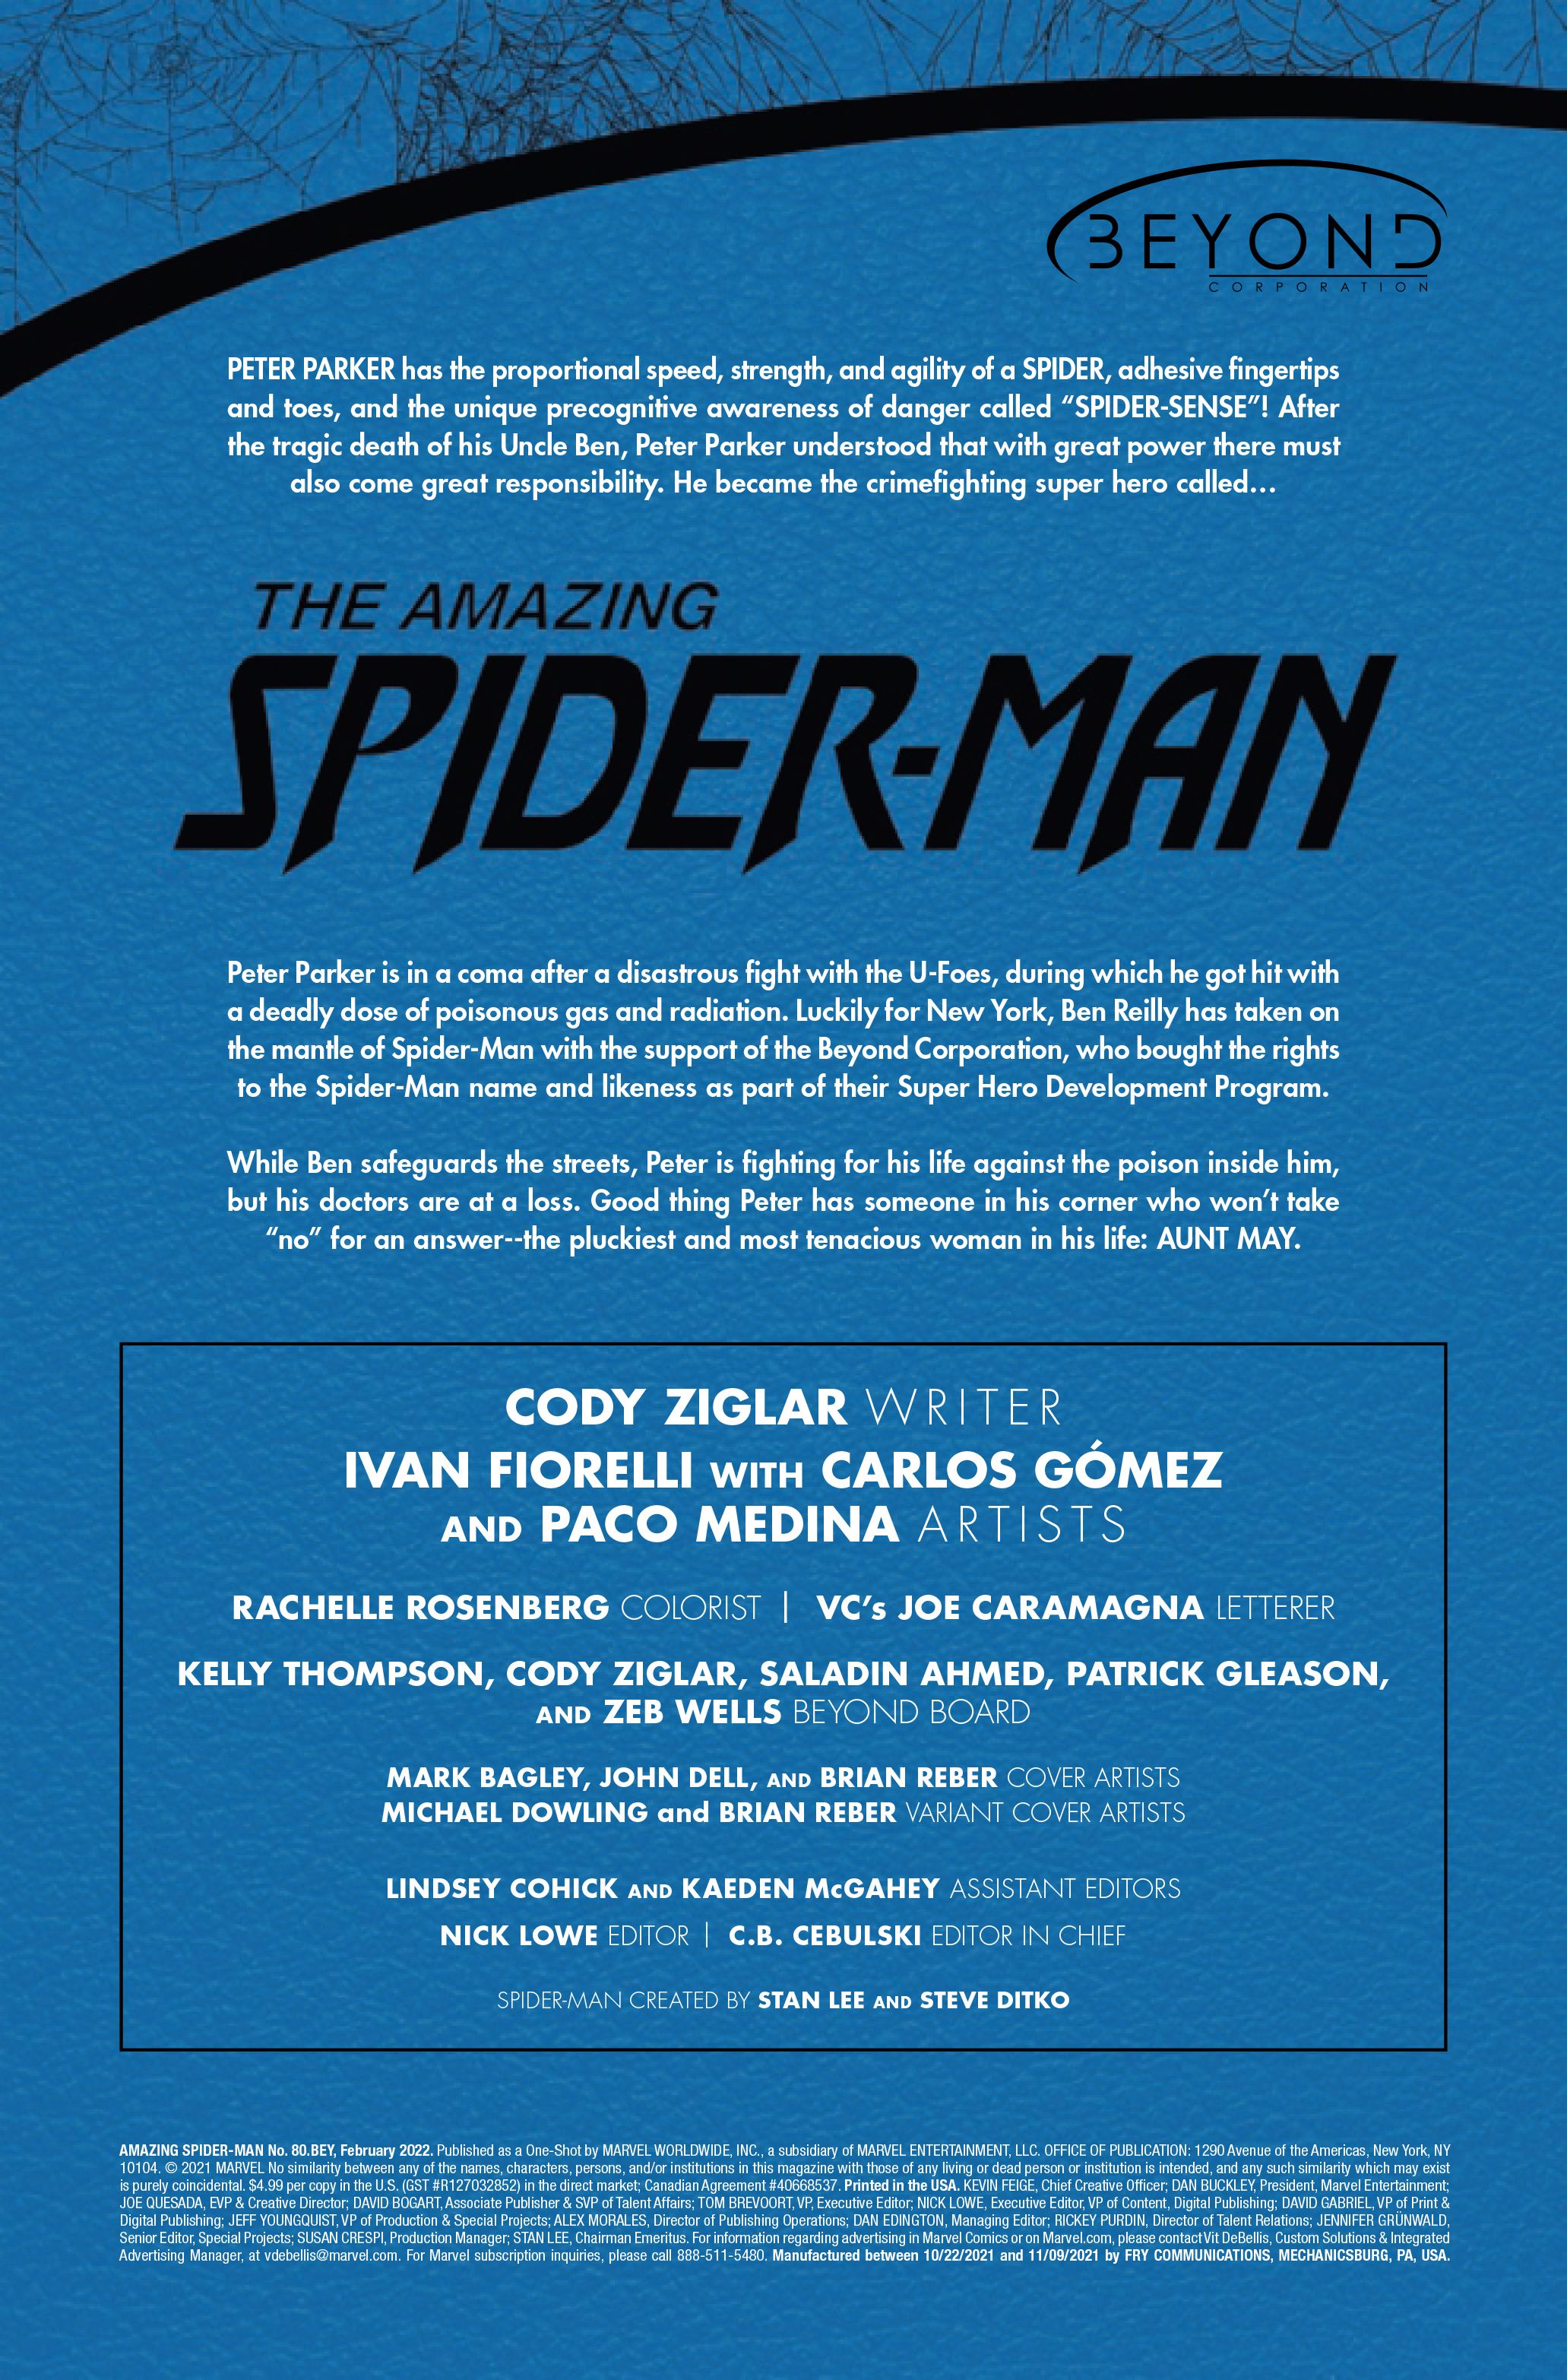 Page 1 of Amazing Spider-Man #80.BEY, by Cody Ziglar, Ivan Fiorelli, Carlos Gomez and Paco Medina.